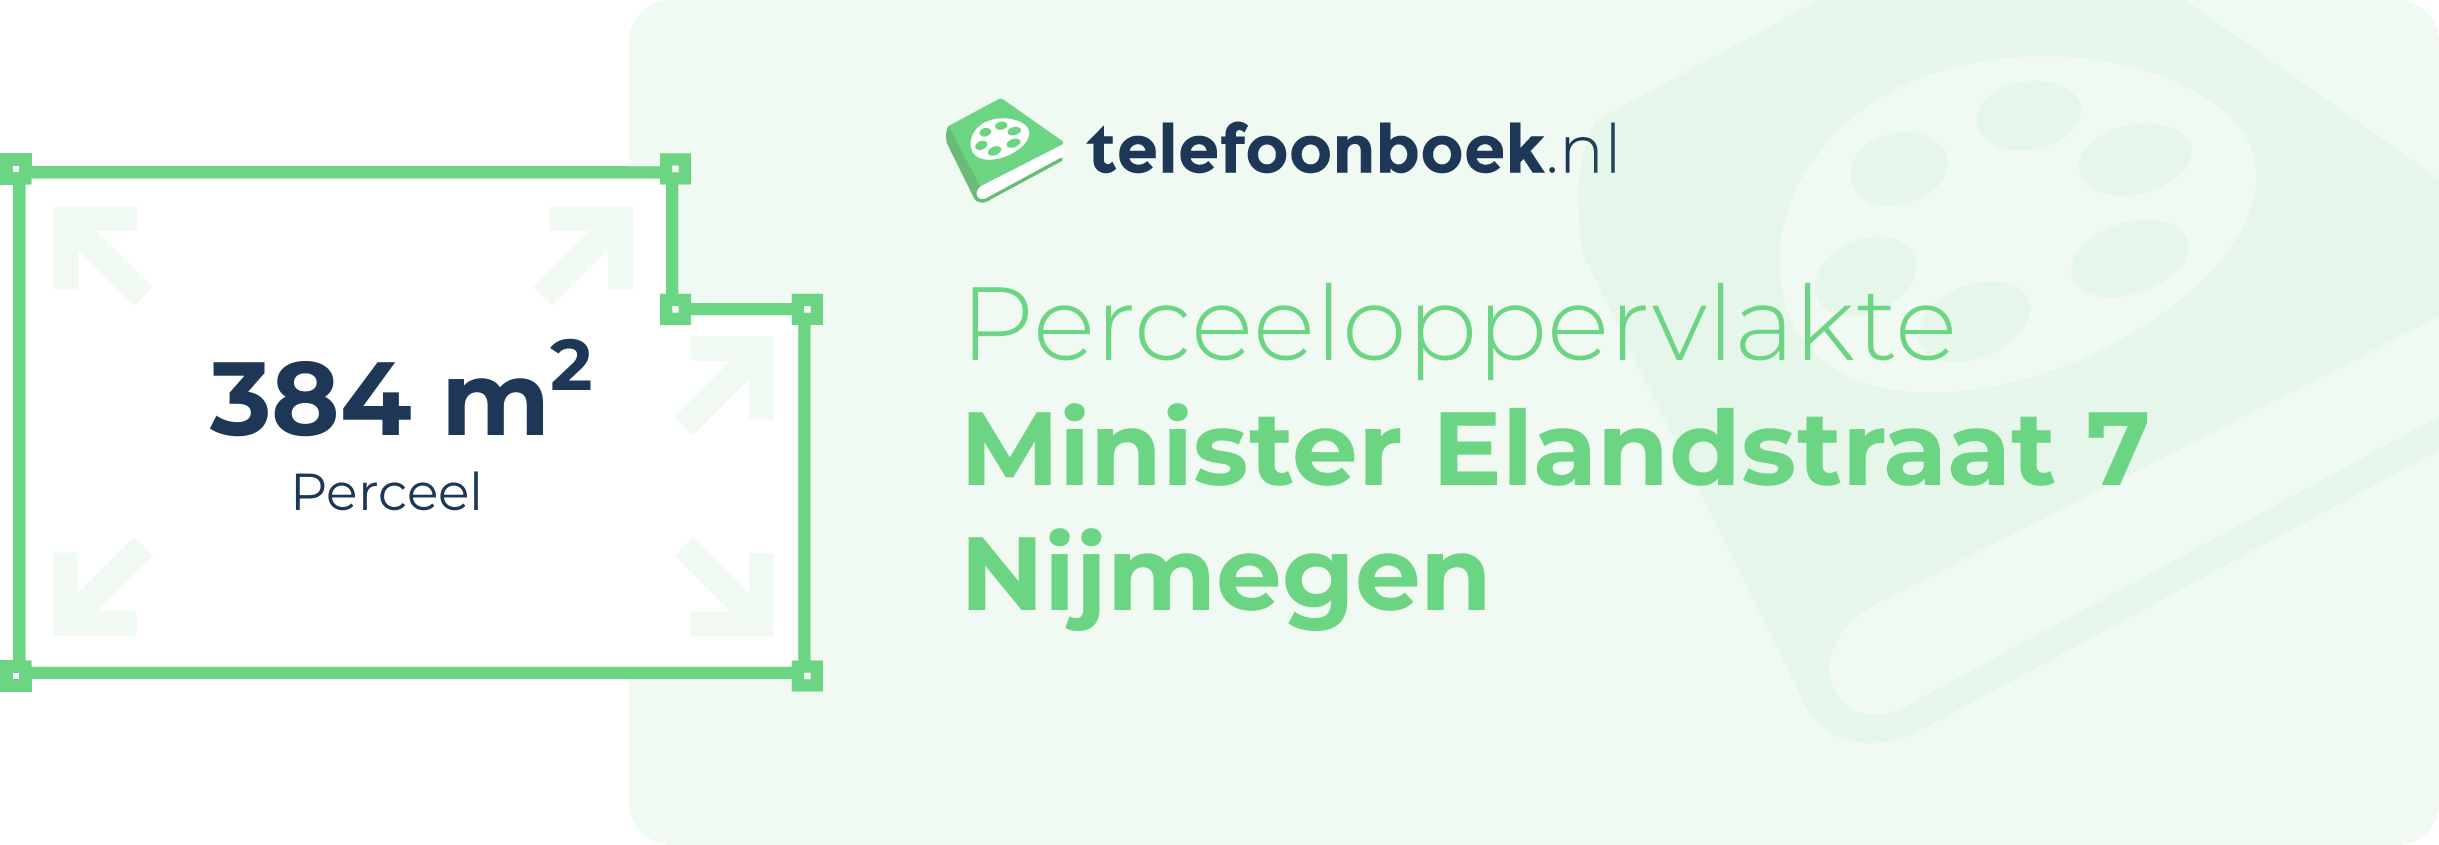 Perceeloppervlakte Minister Elandstraat 7 Nijmegen